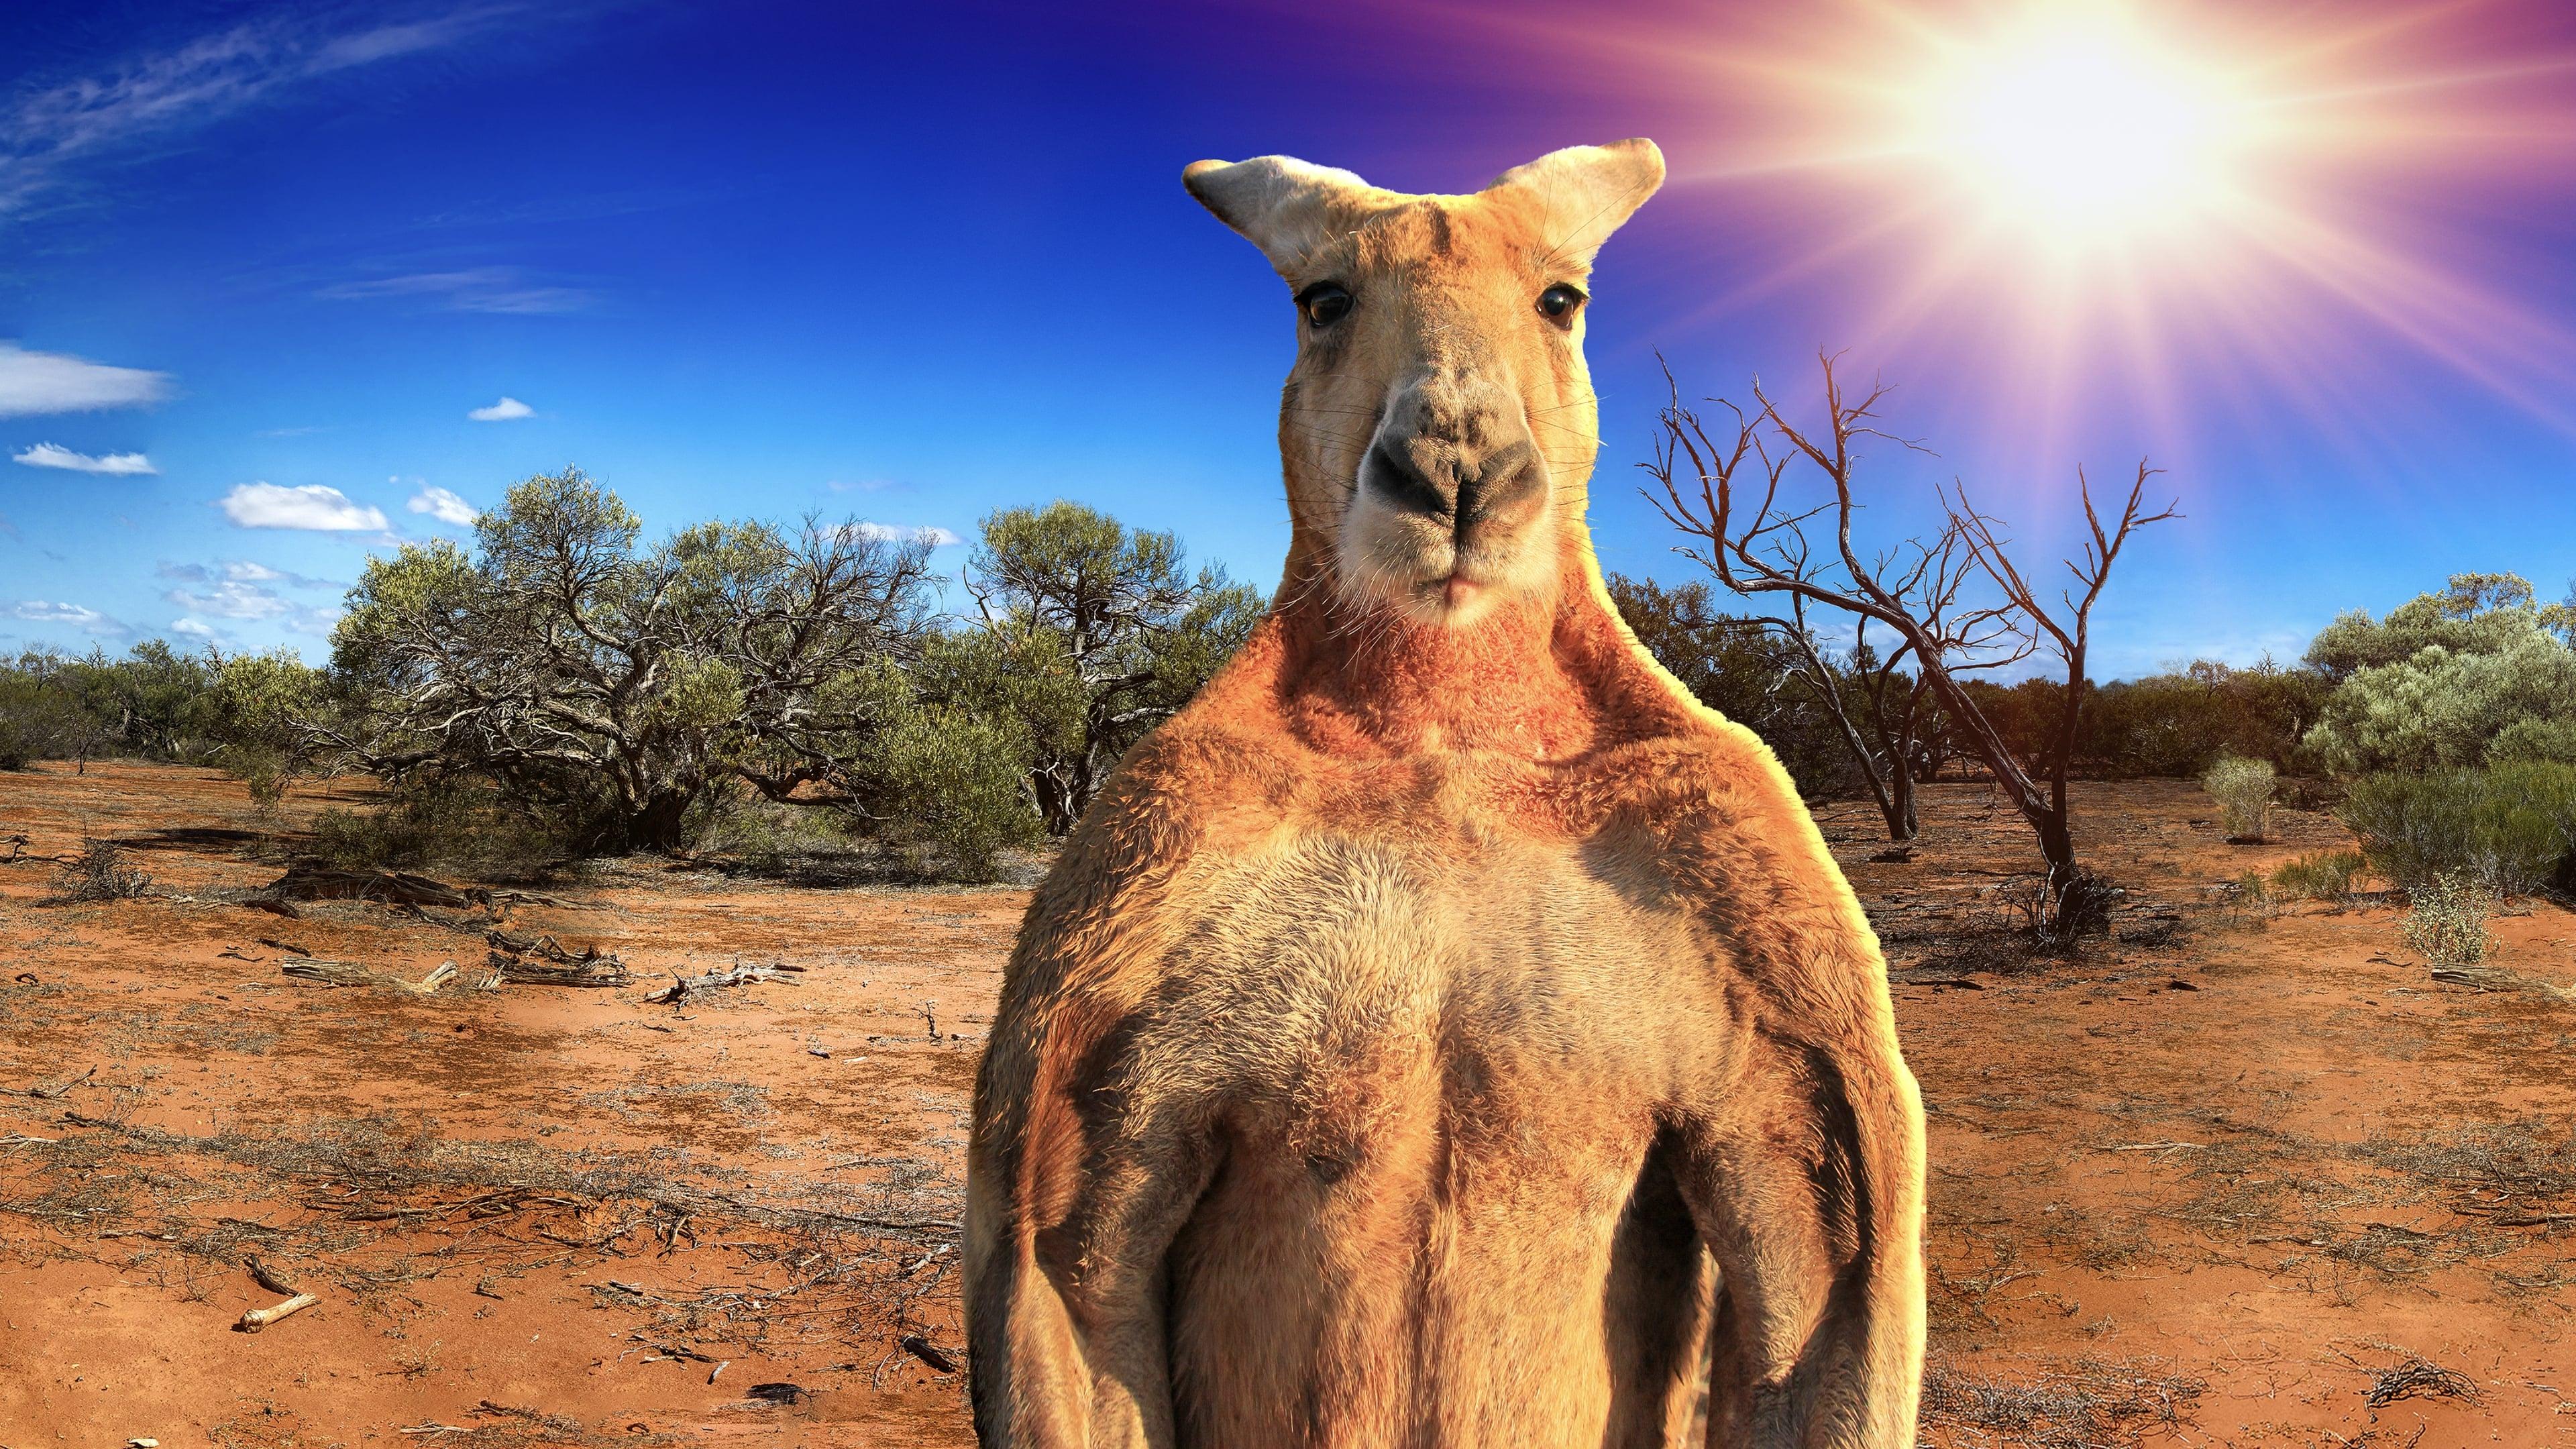 The Kangaroo King backdrop